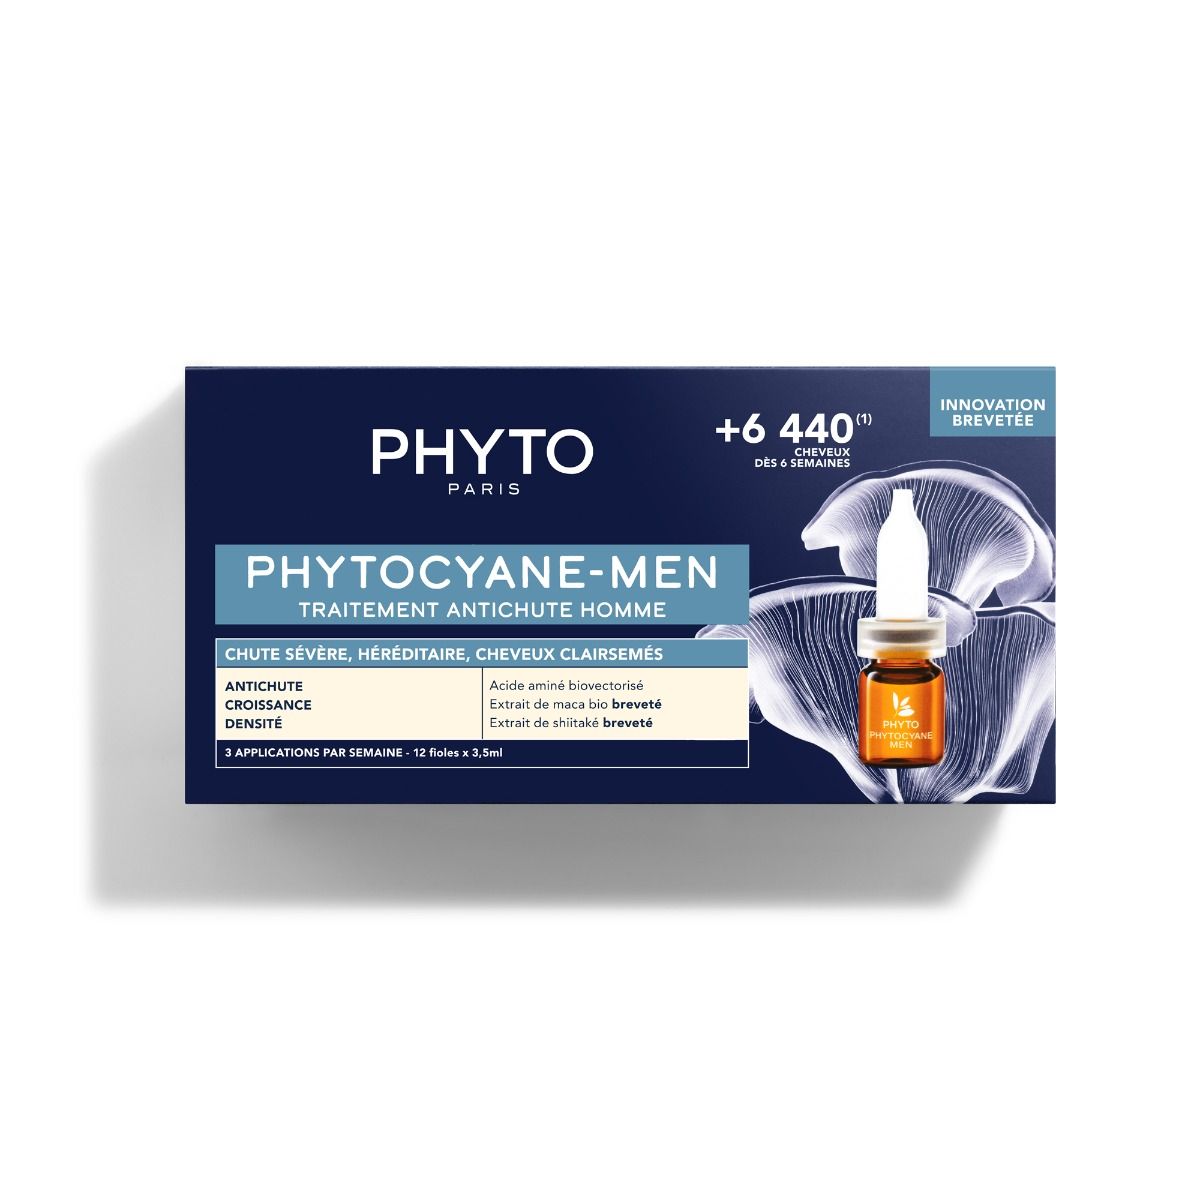 PHYTOCYANE ANTI HAIR LOSS TREATMENT FOR MEN